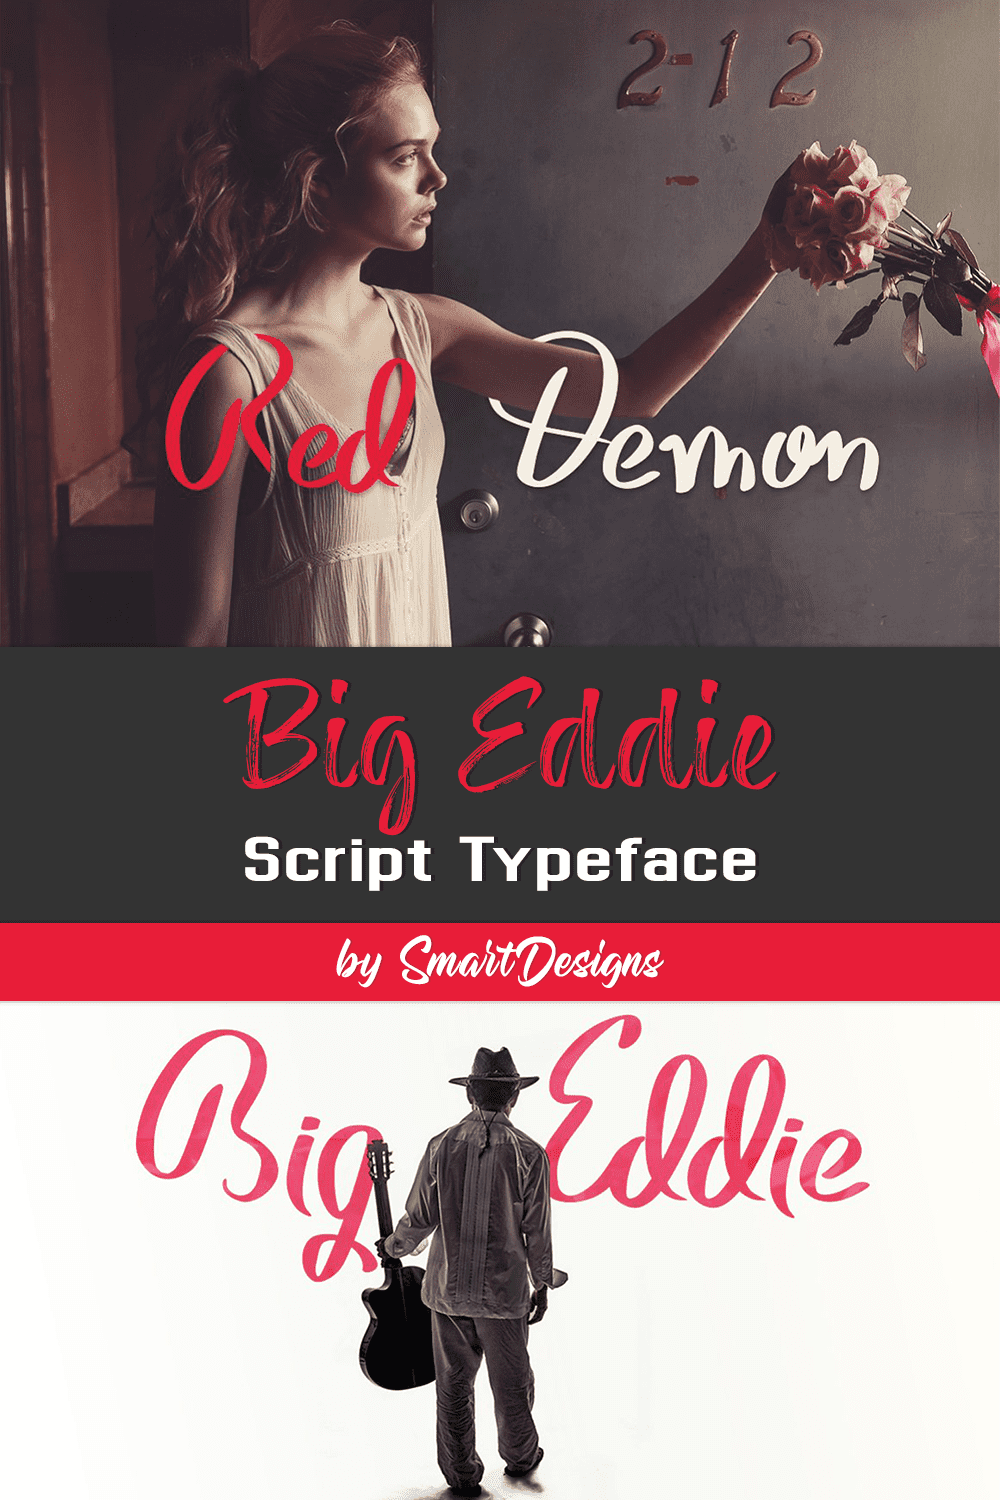 Big eddie script typeface of pinterest.